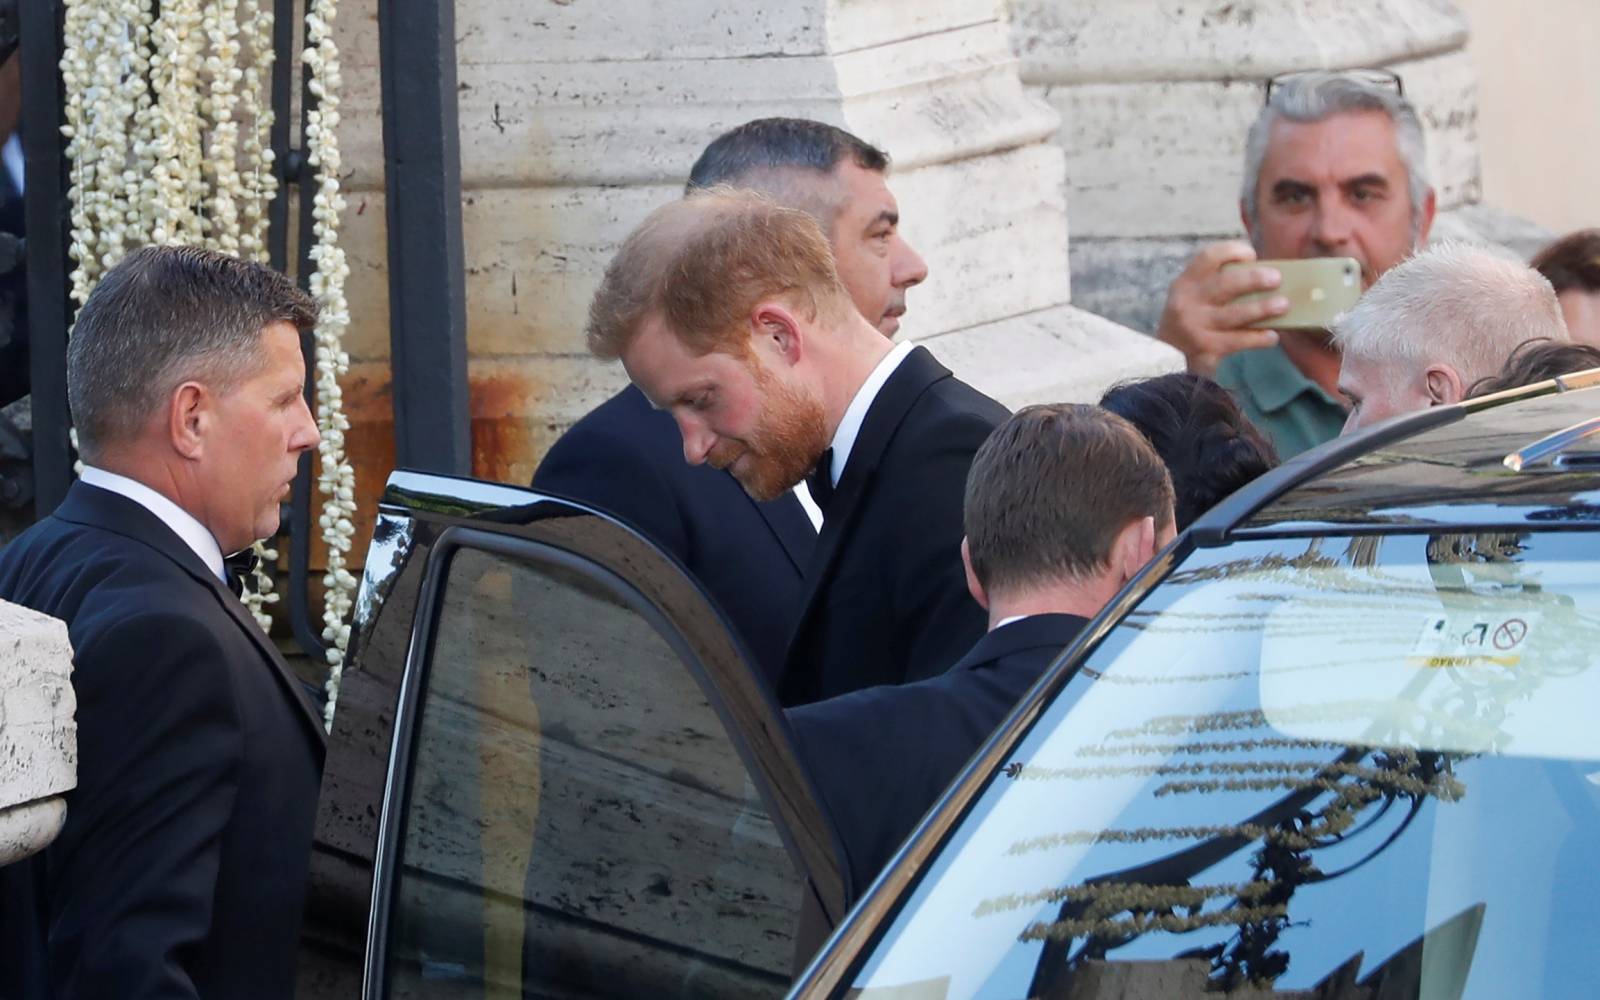 Britain's Prince Harry, Duke of Sussex, arrives to attend the wedding of fashion designer Misha Nonoo at Villa Aurelia in Rome